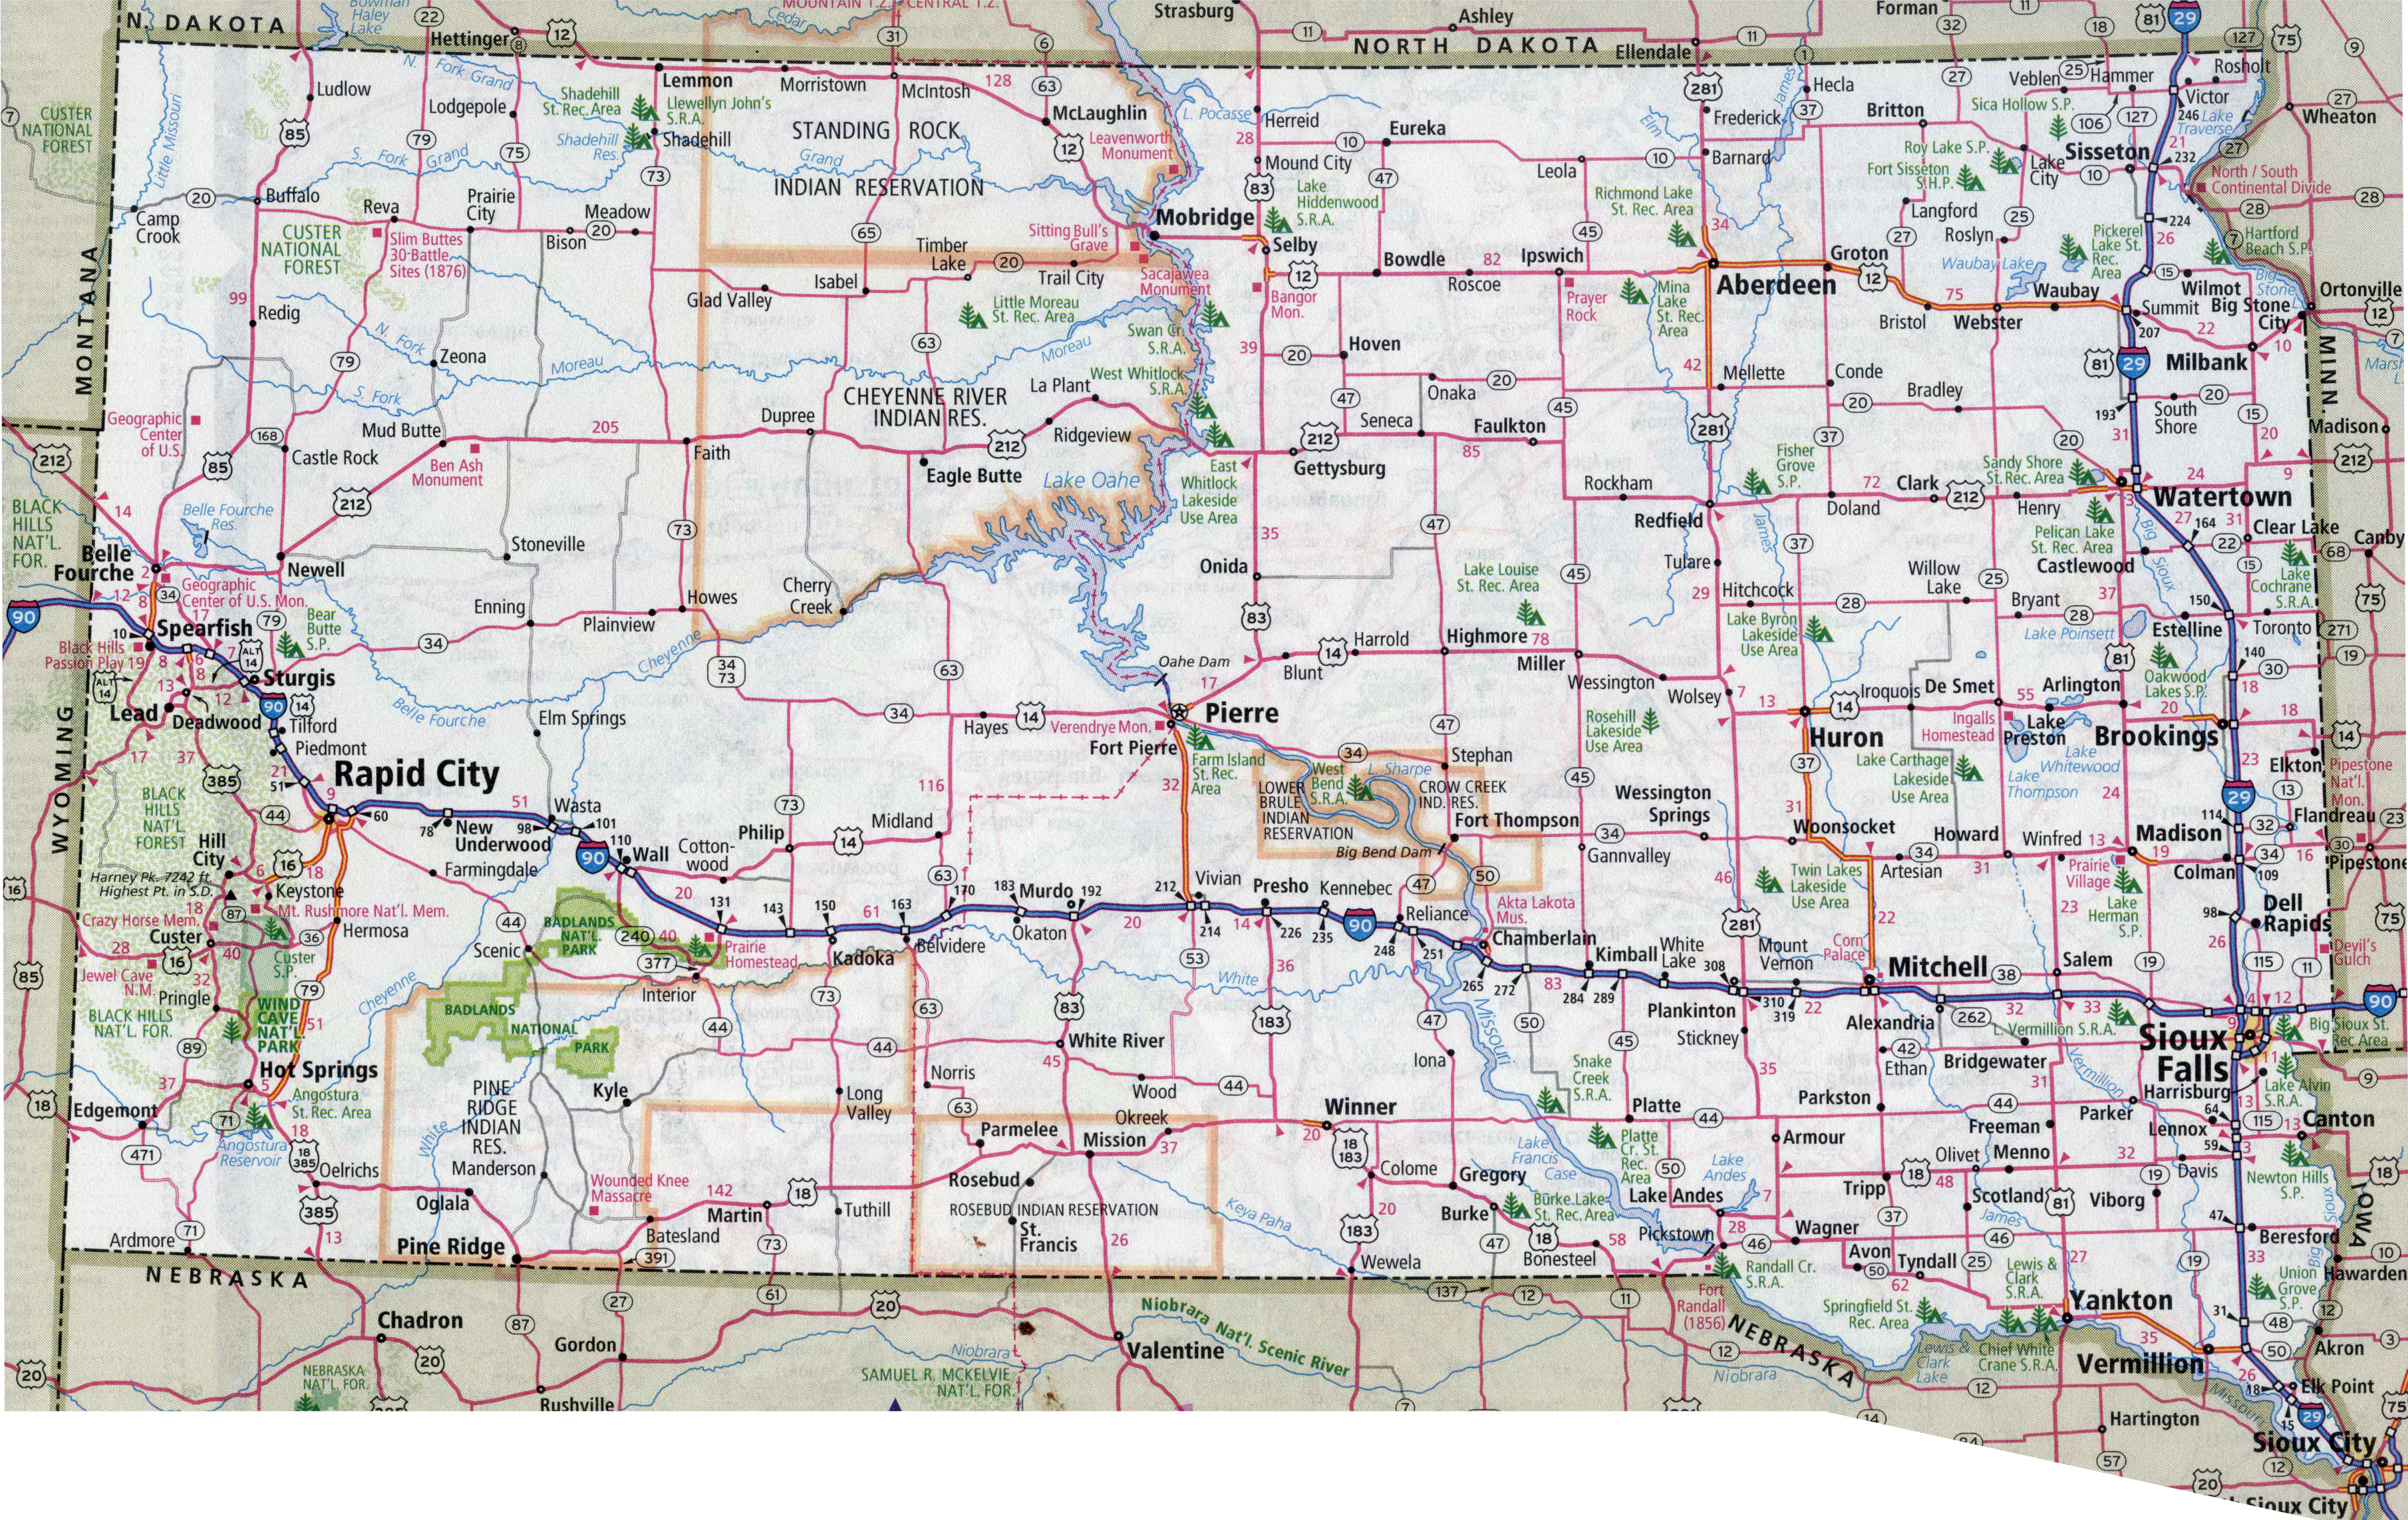 South Dakota State Highway Map - State Coastal Towns Map